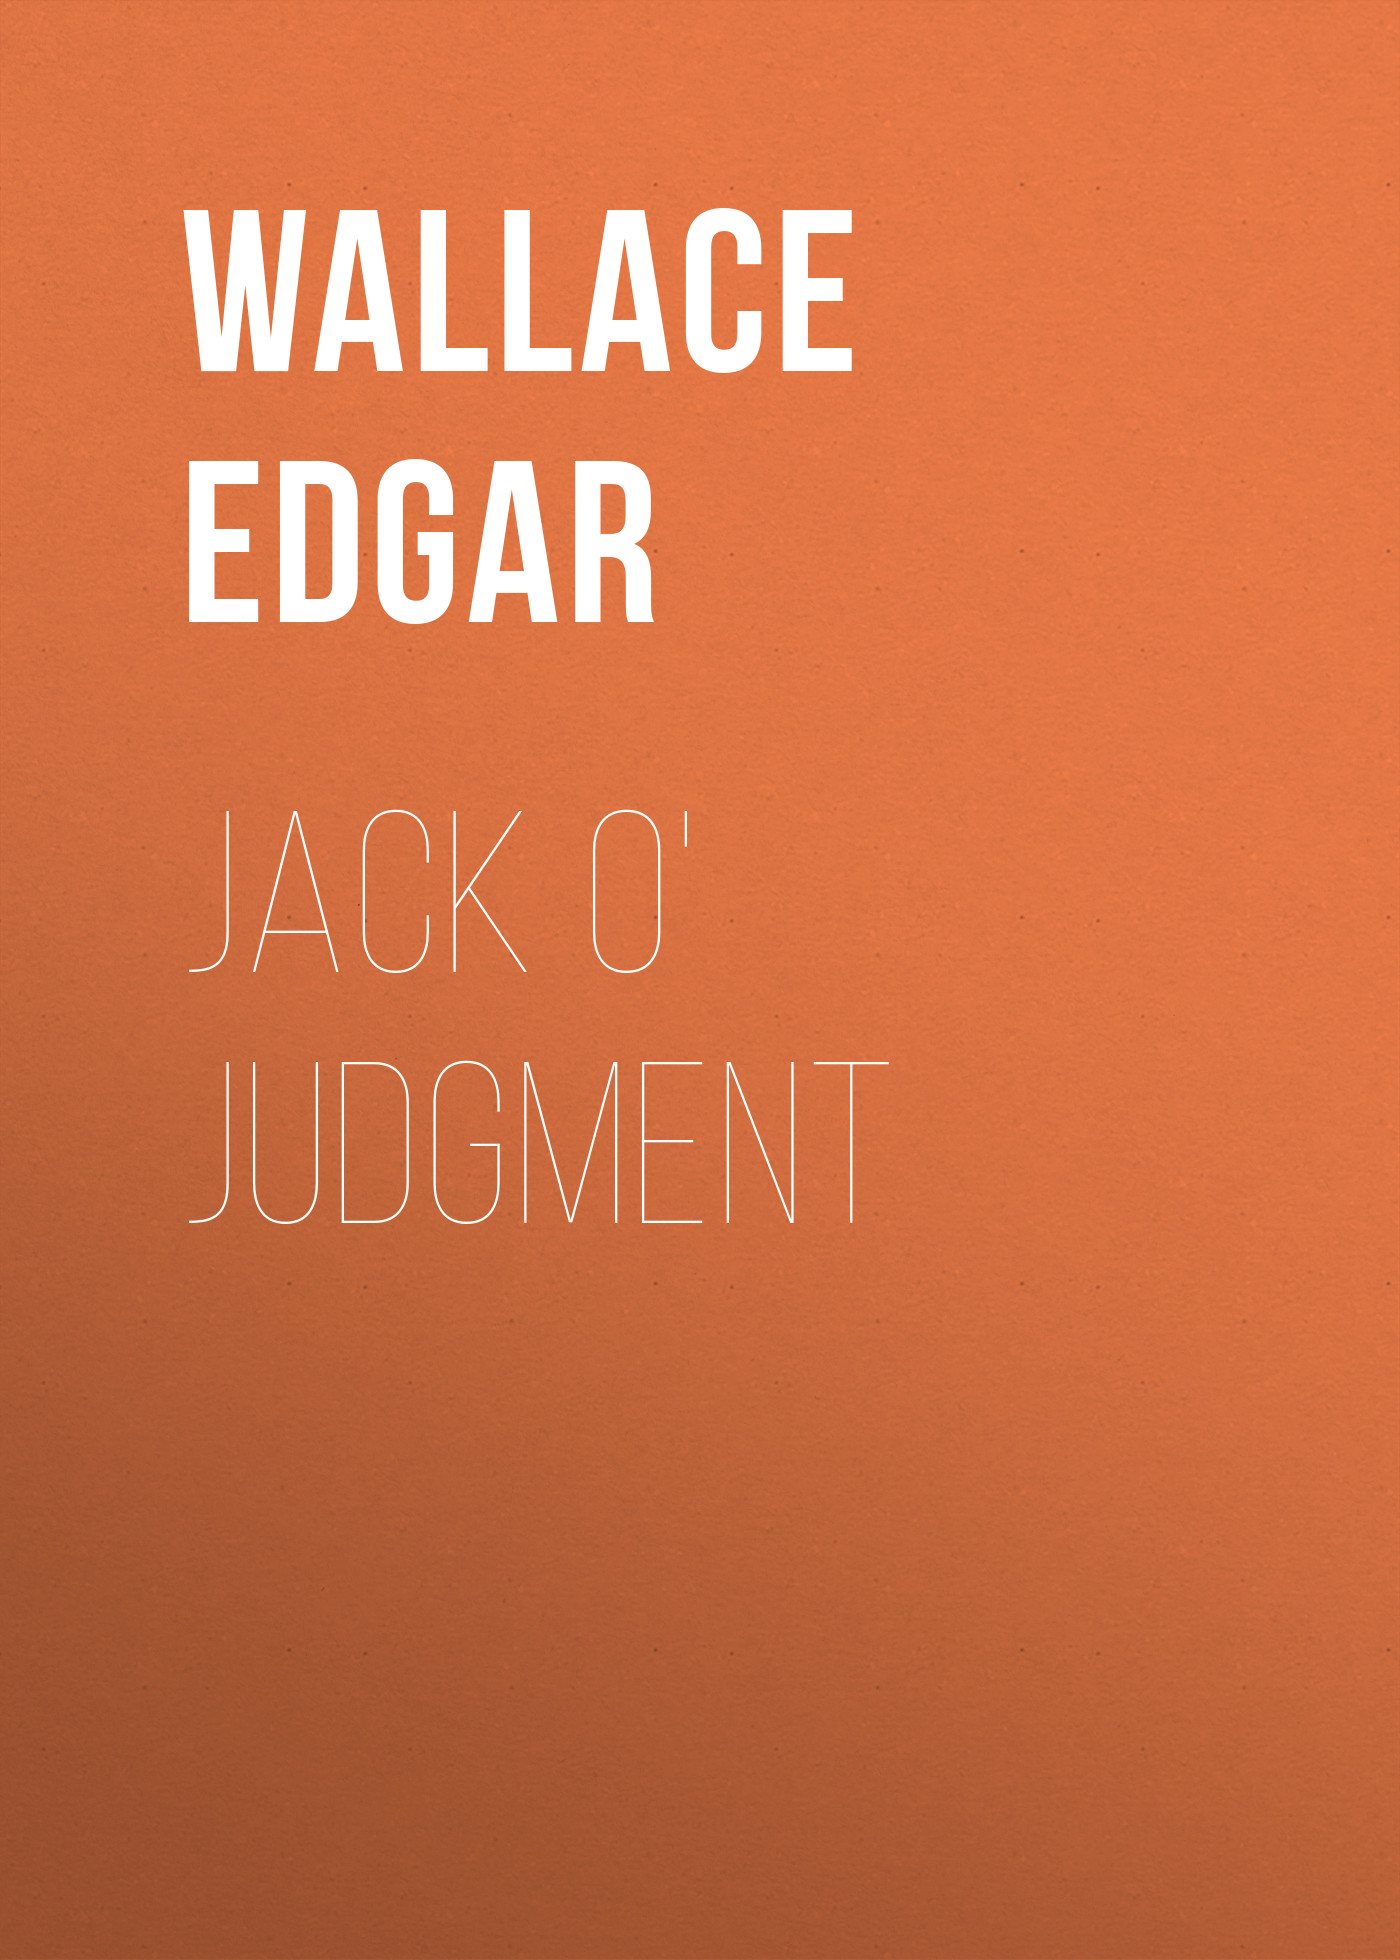 Jack O'Judgment